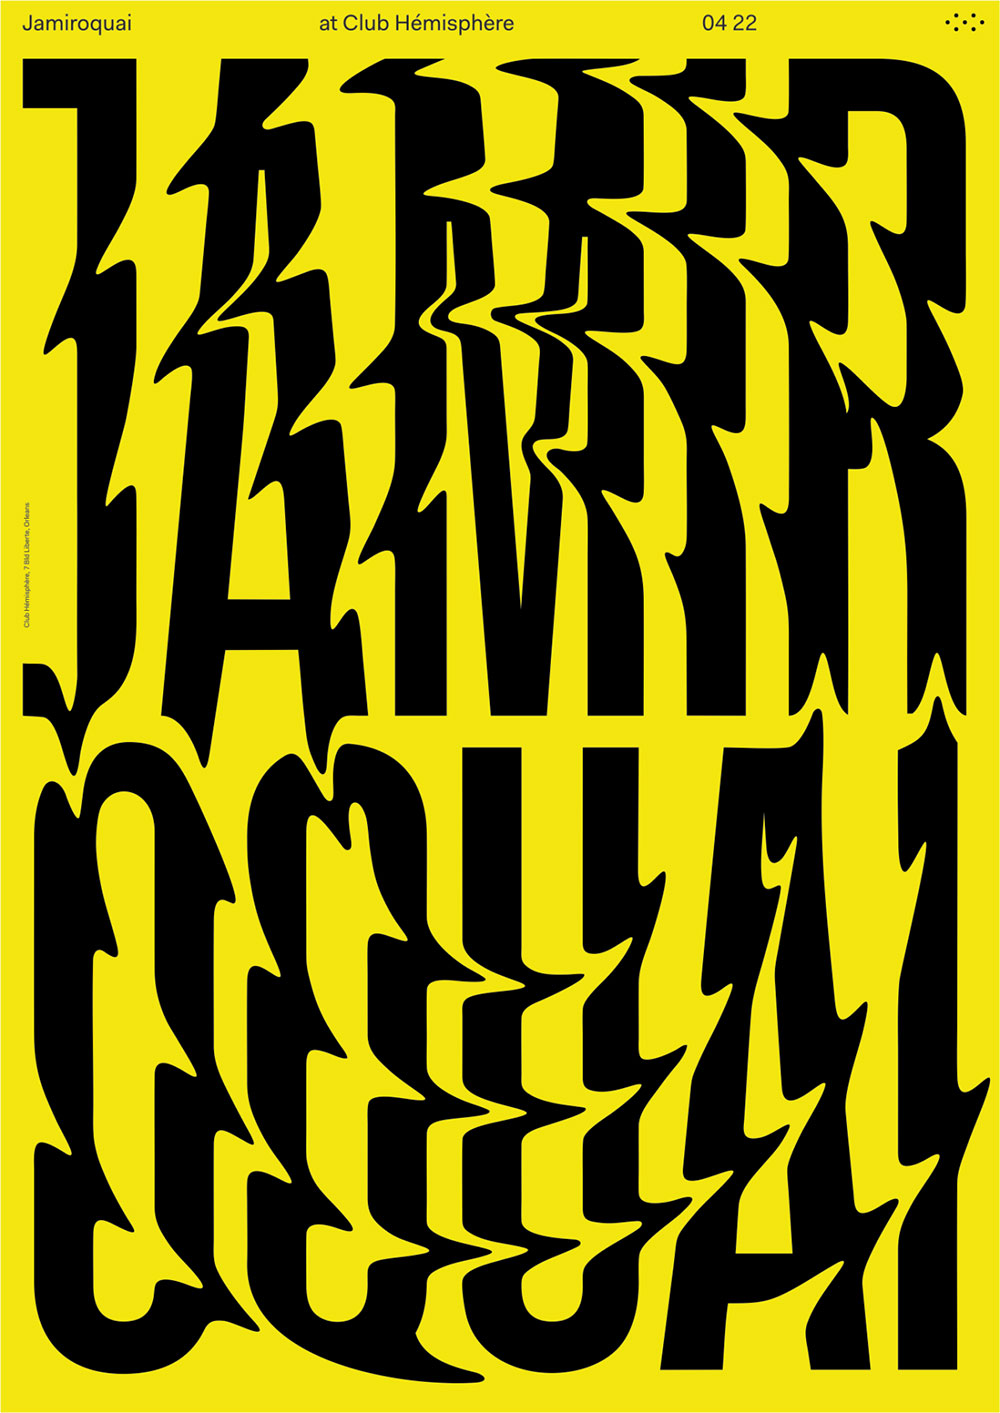 Poster for Club Hemisphere series featuring Jamiroquai